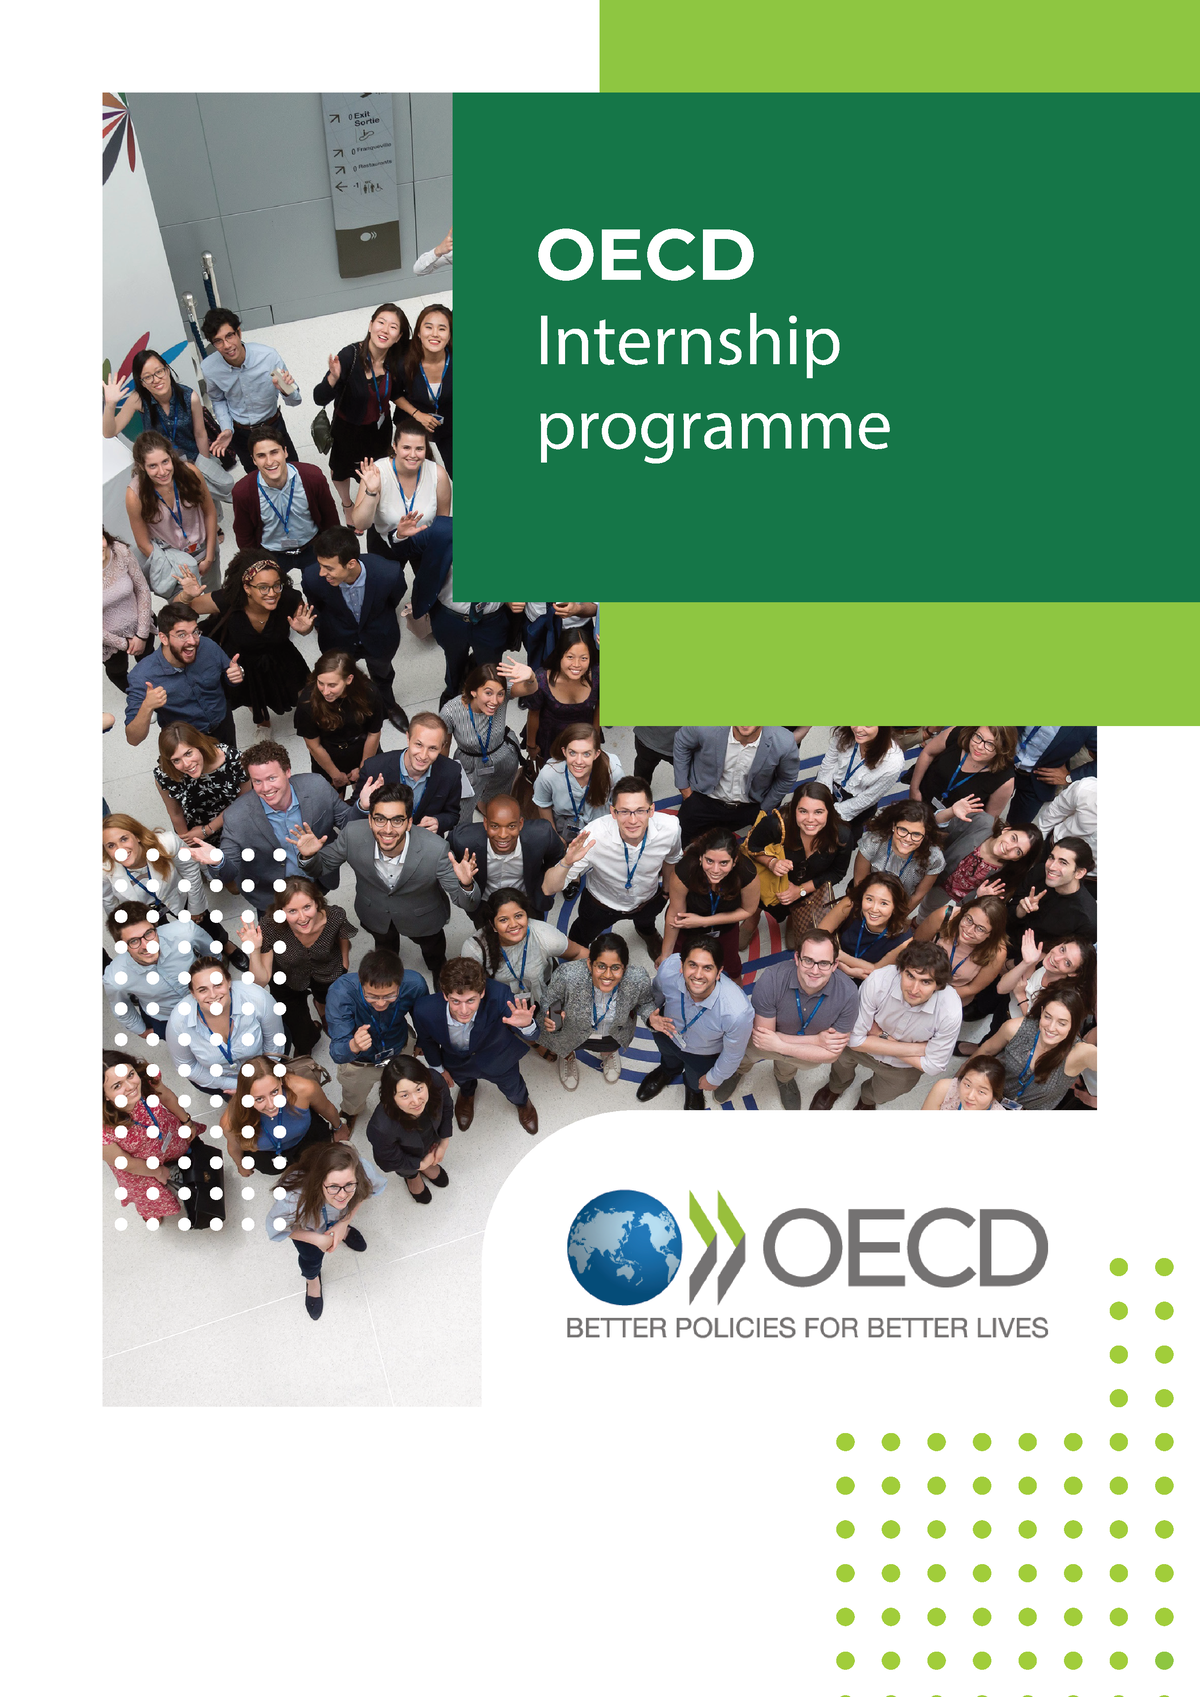 Internship Brochure Zxcvhhjnnk hhbj OECD Internship programme The